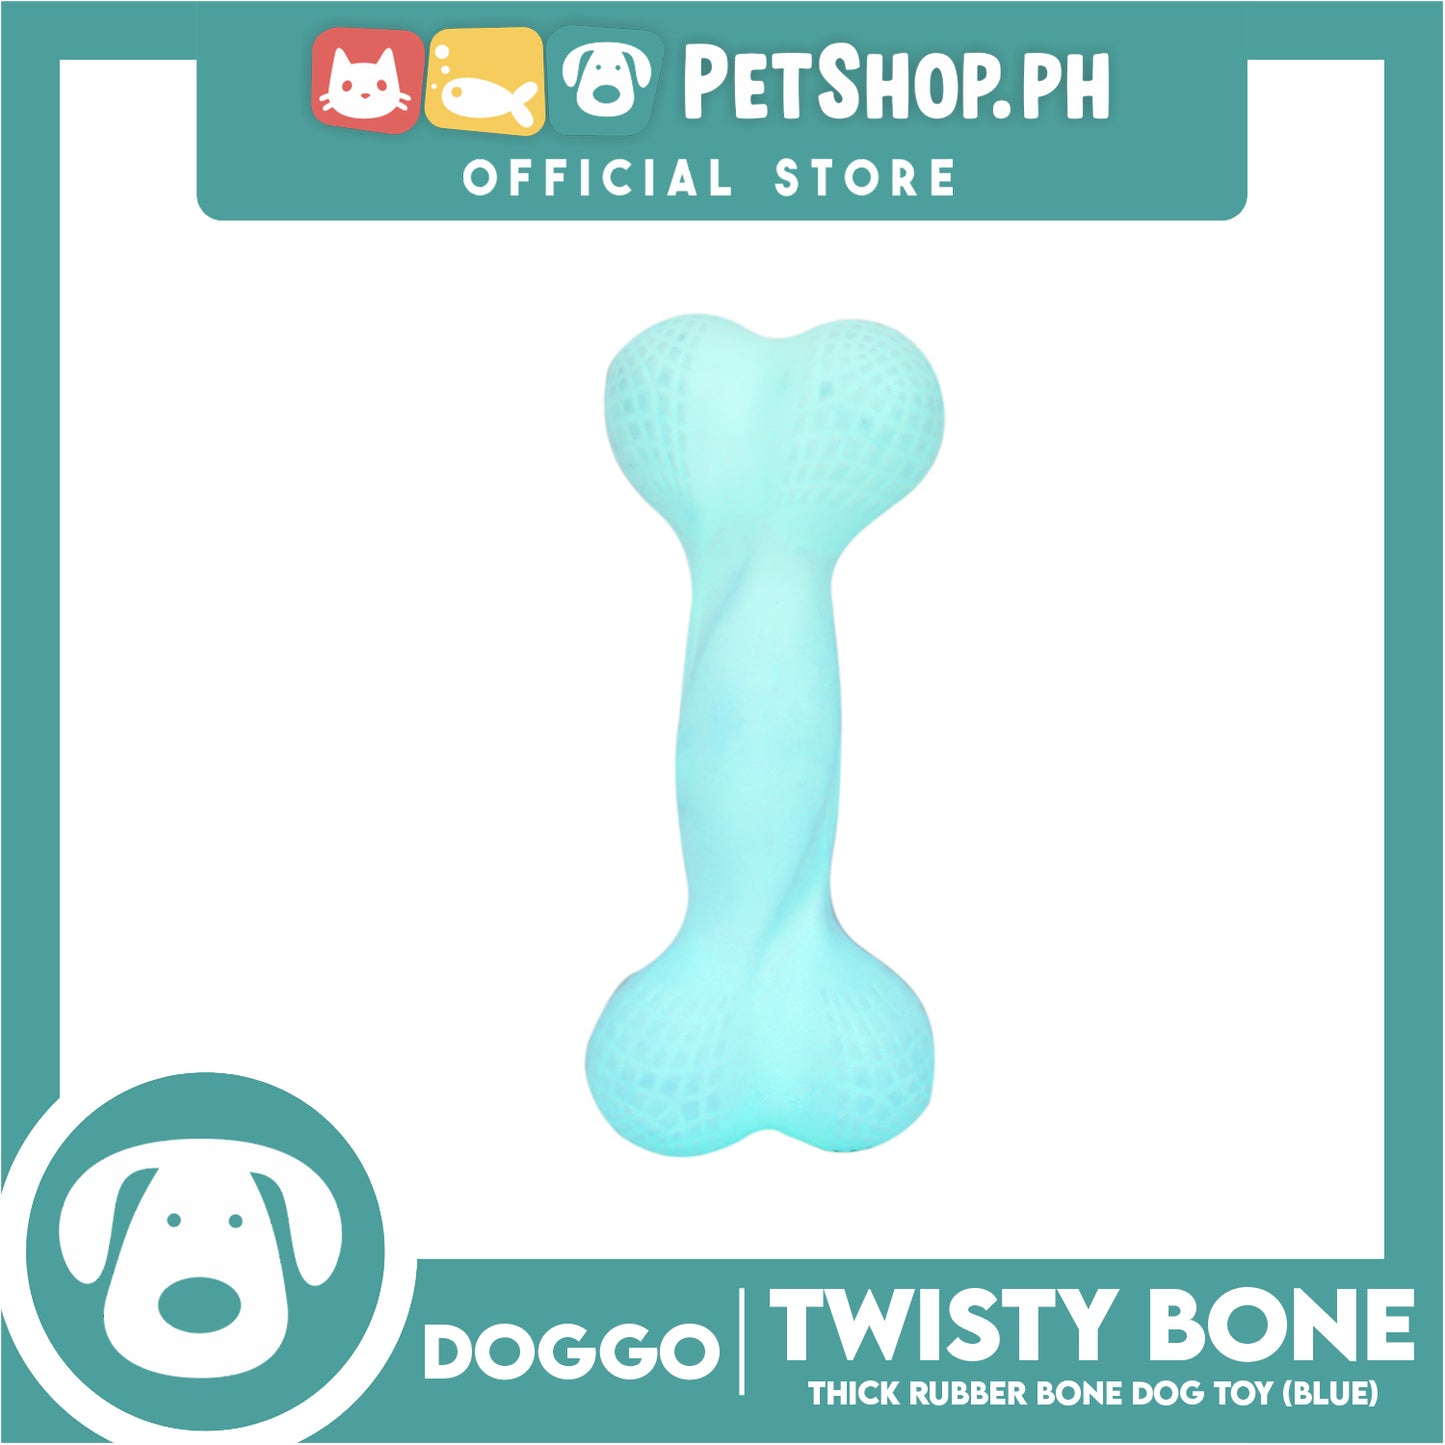 Doggo Twisty Bone (Blue) Ultra Tough Rubber Dog Toy